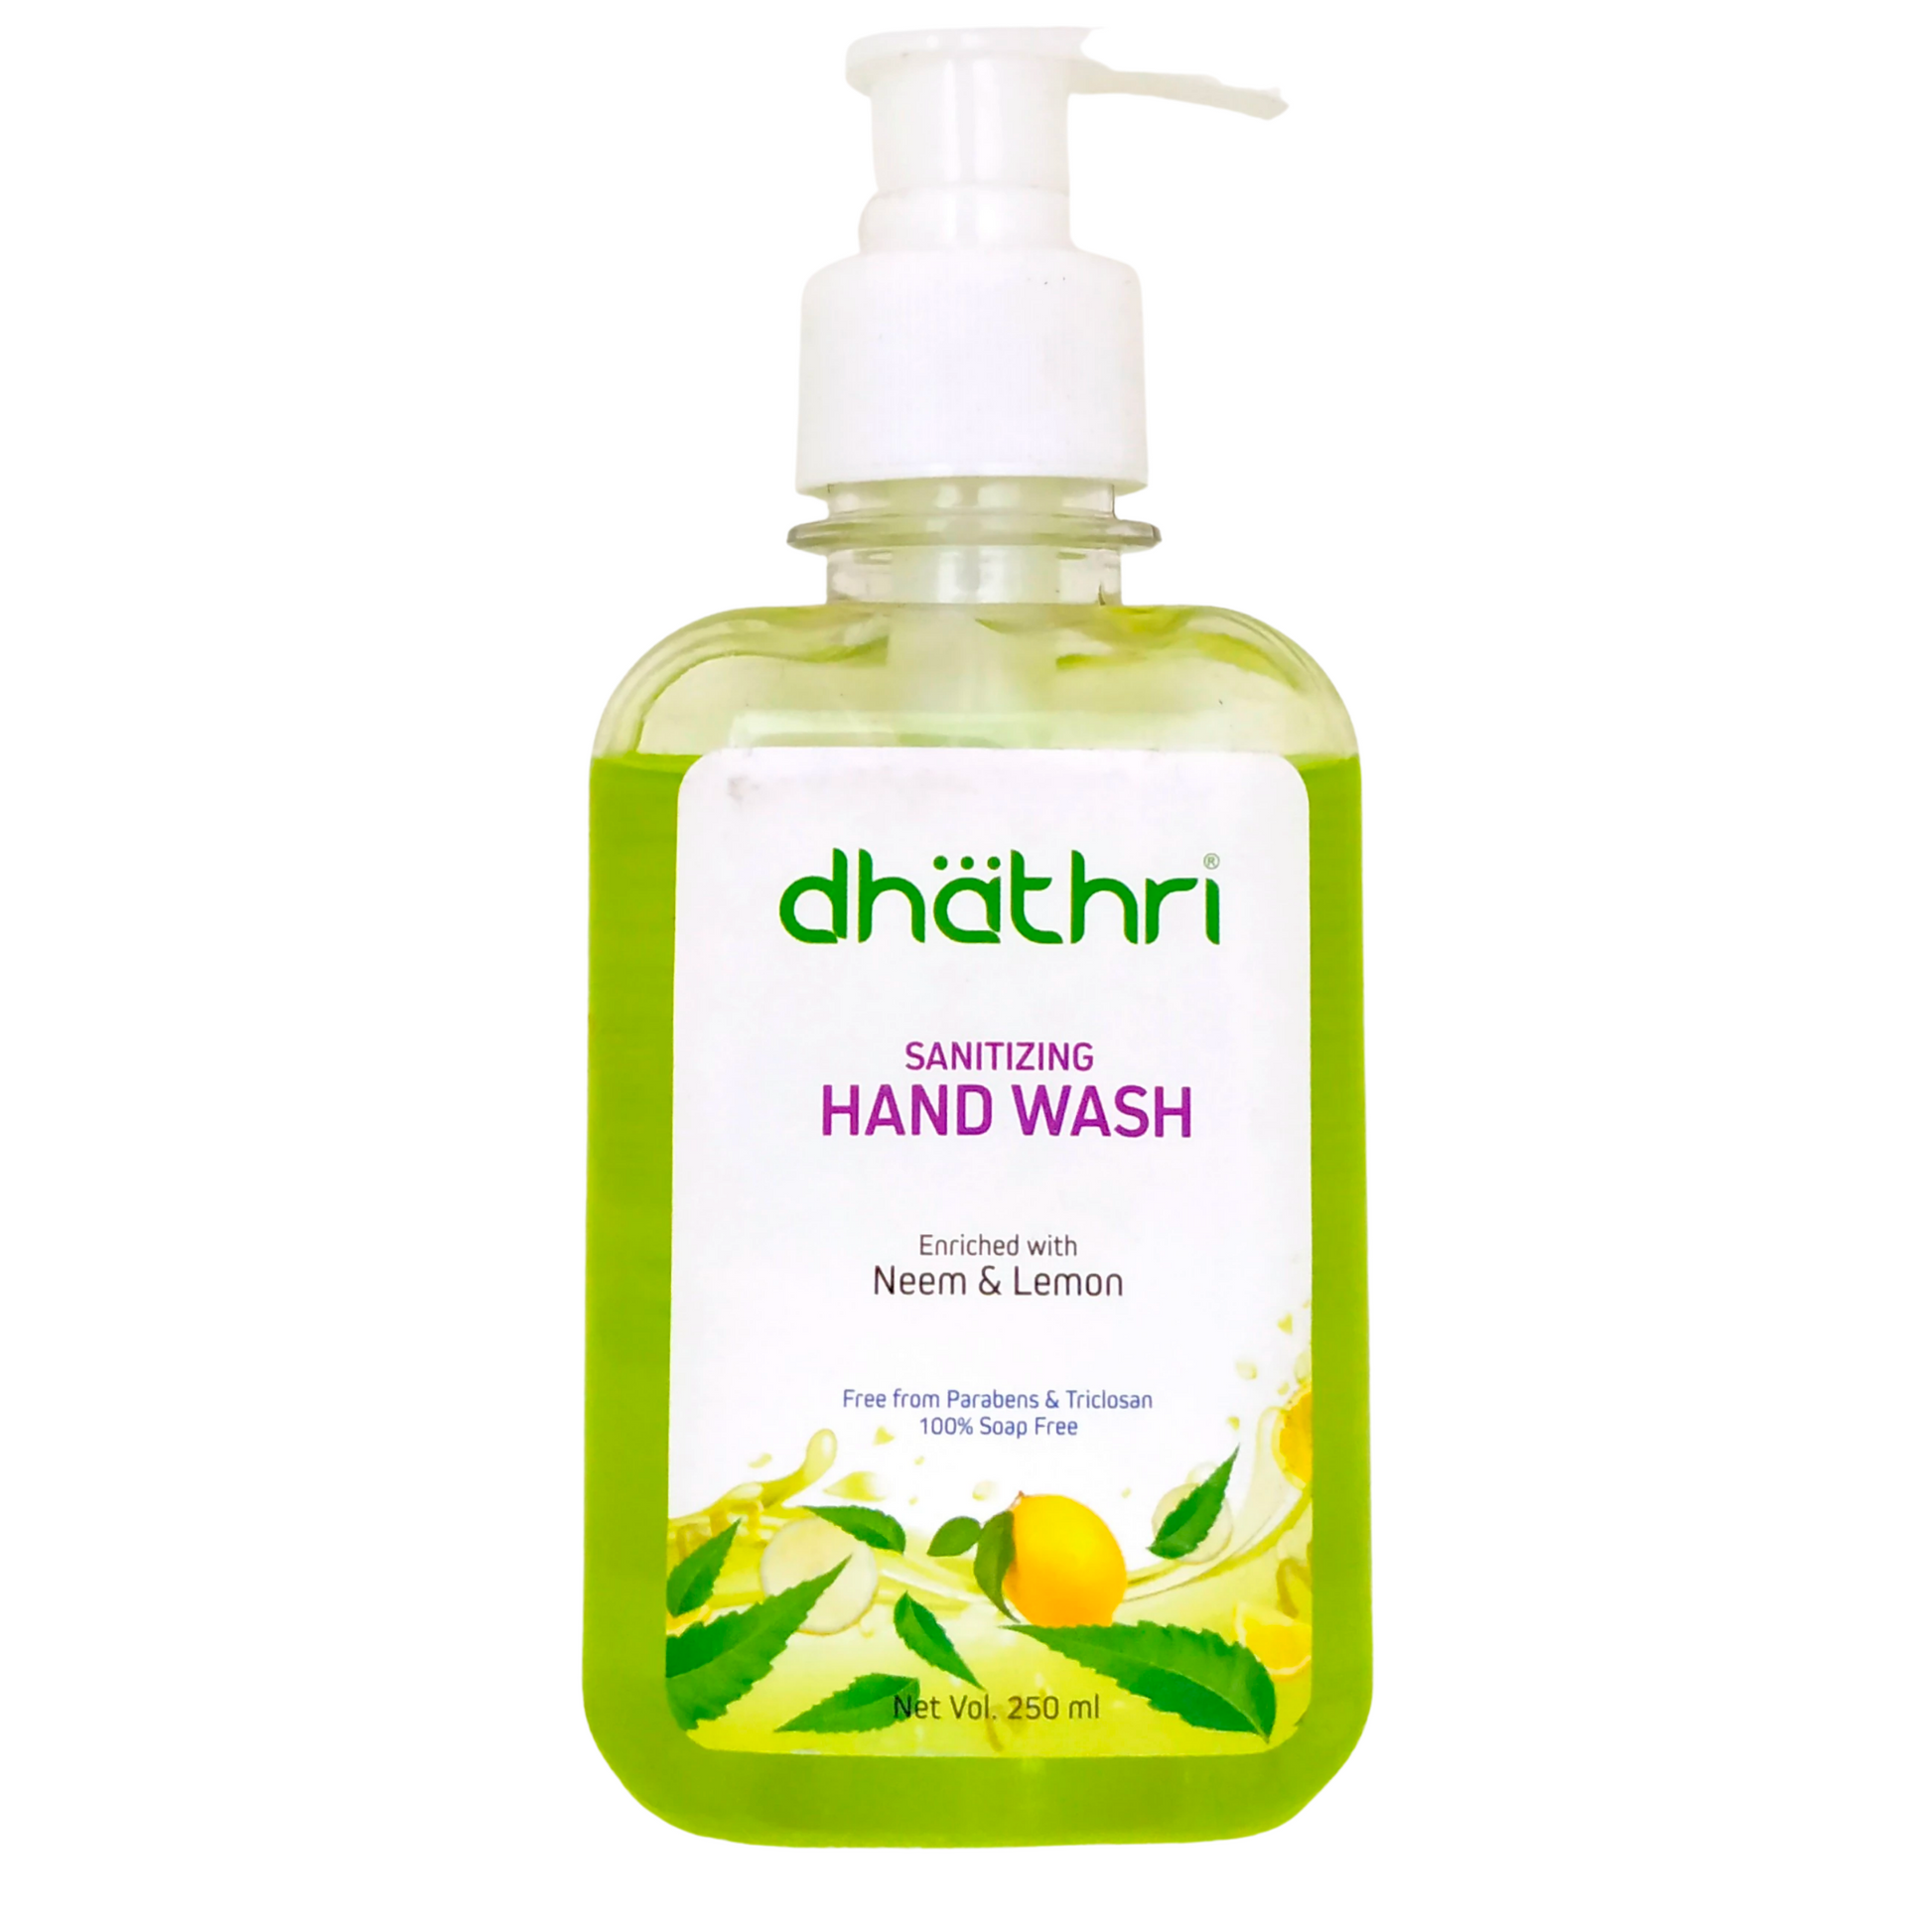 Shop Dhathri Sanitizing Handwash Neem and Lemon - 250ml at price 90.00 from Dhathri Online - Ayush Care